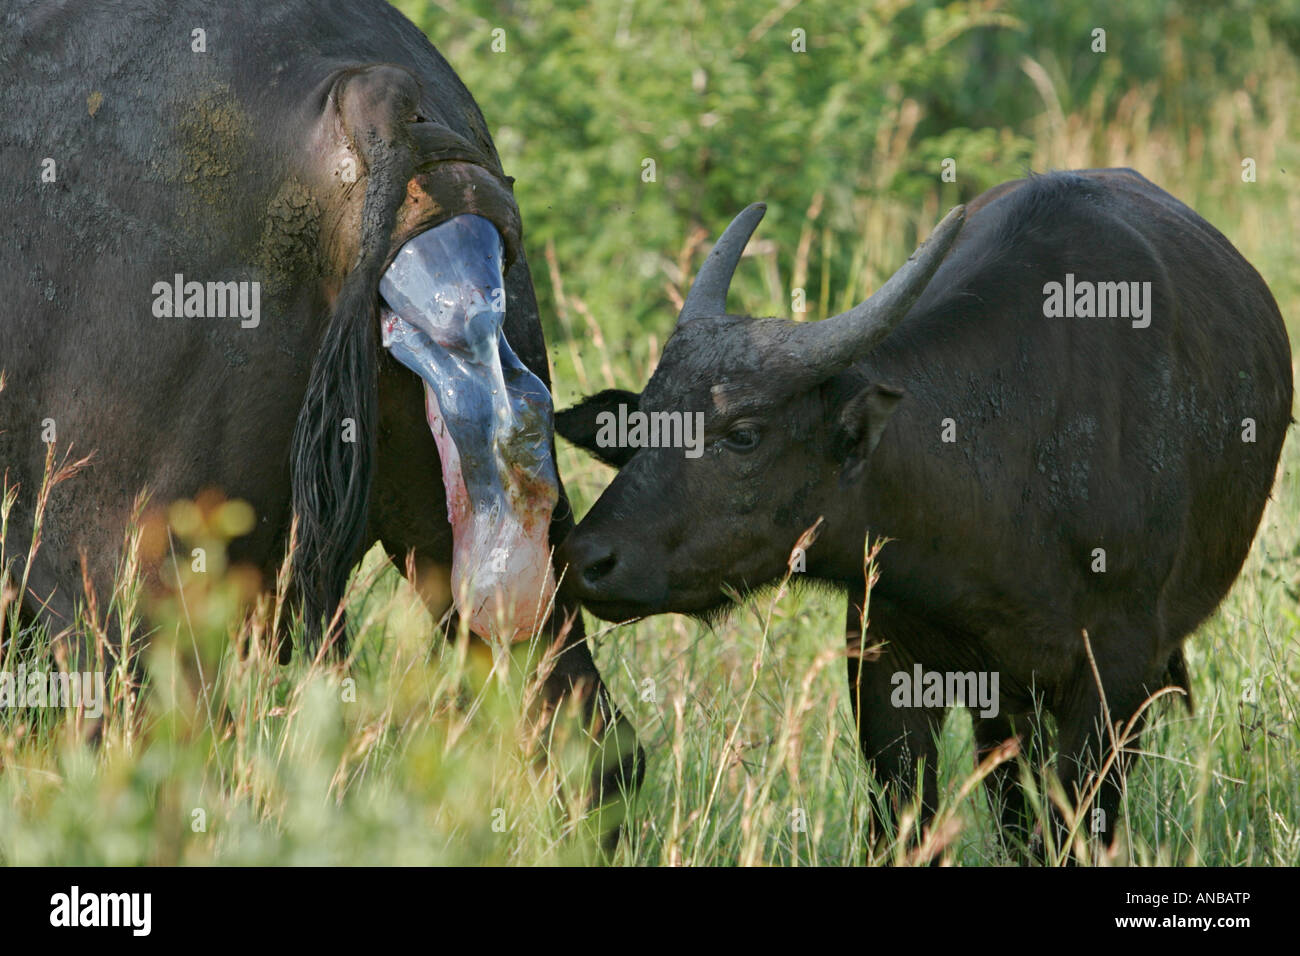 Buffalo giving birth Stock Photo - Alamy